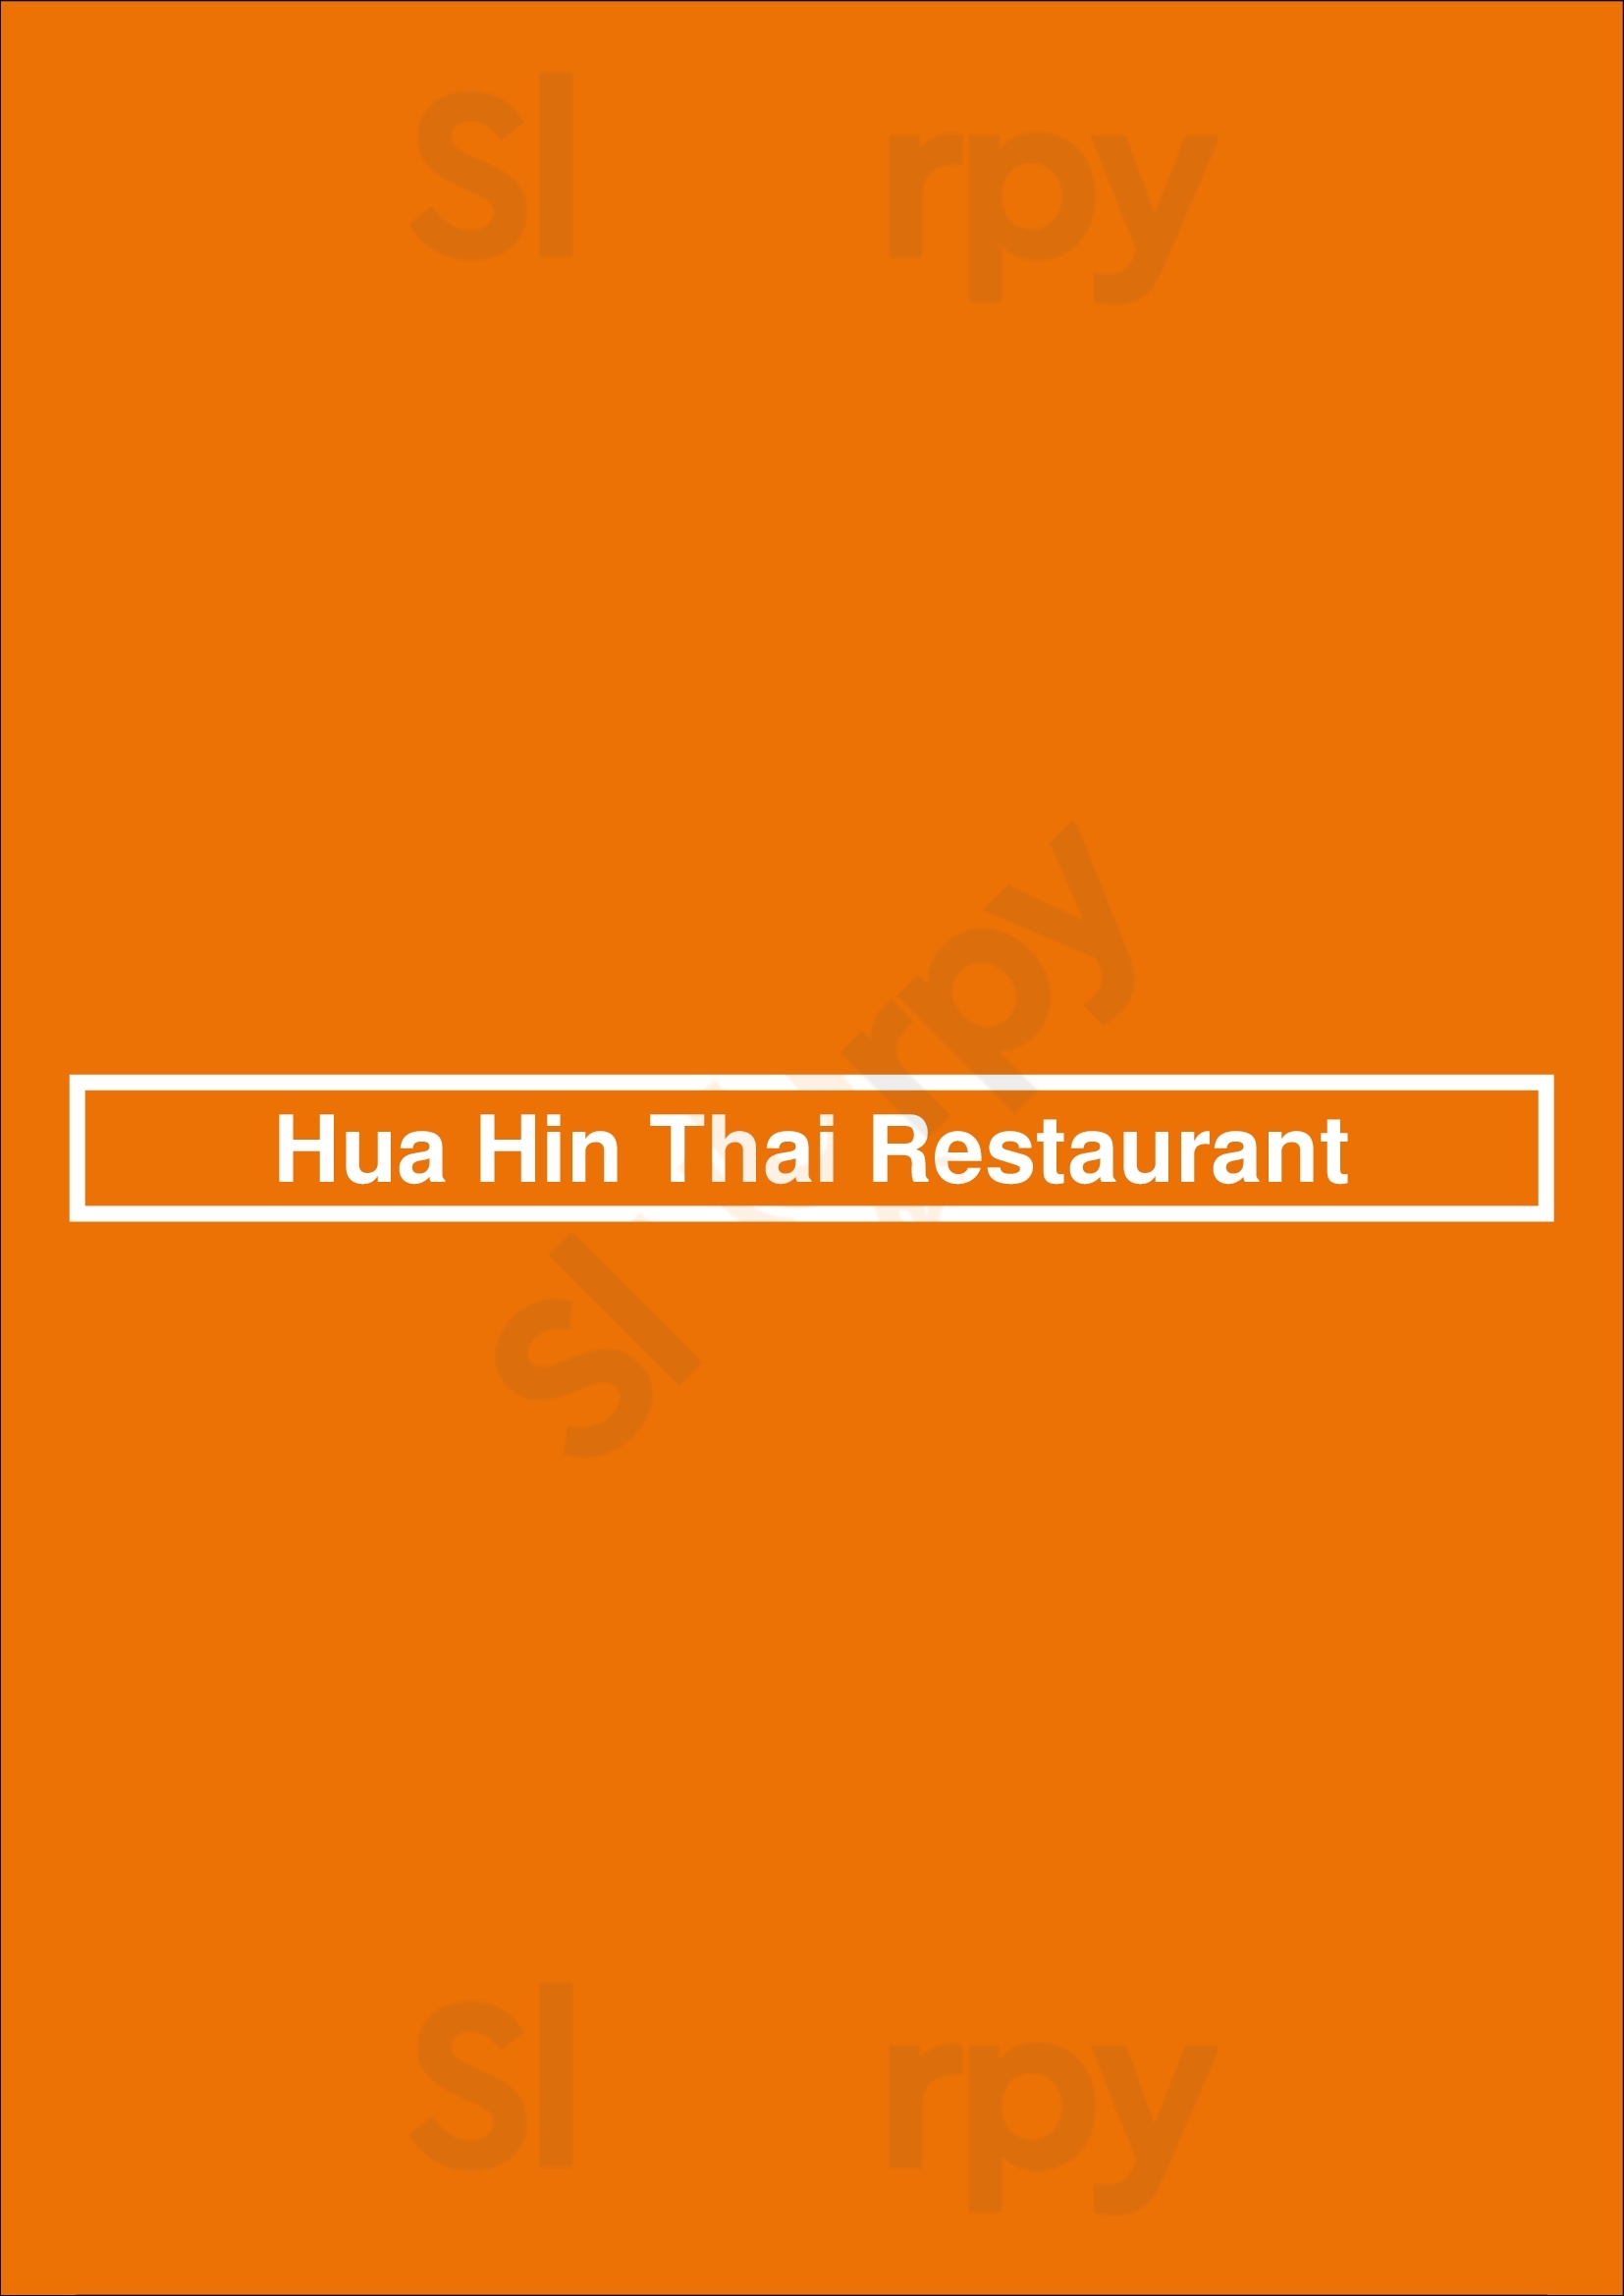 Hua Hin Thai Restaurant Rotterdam Menu - 1